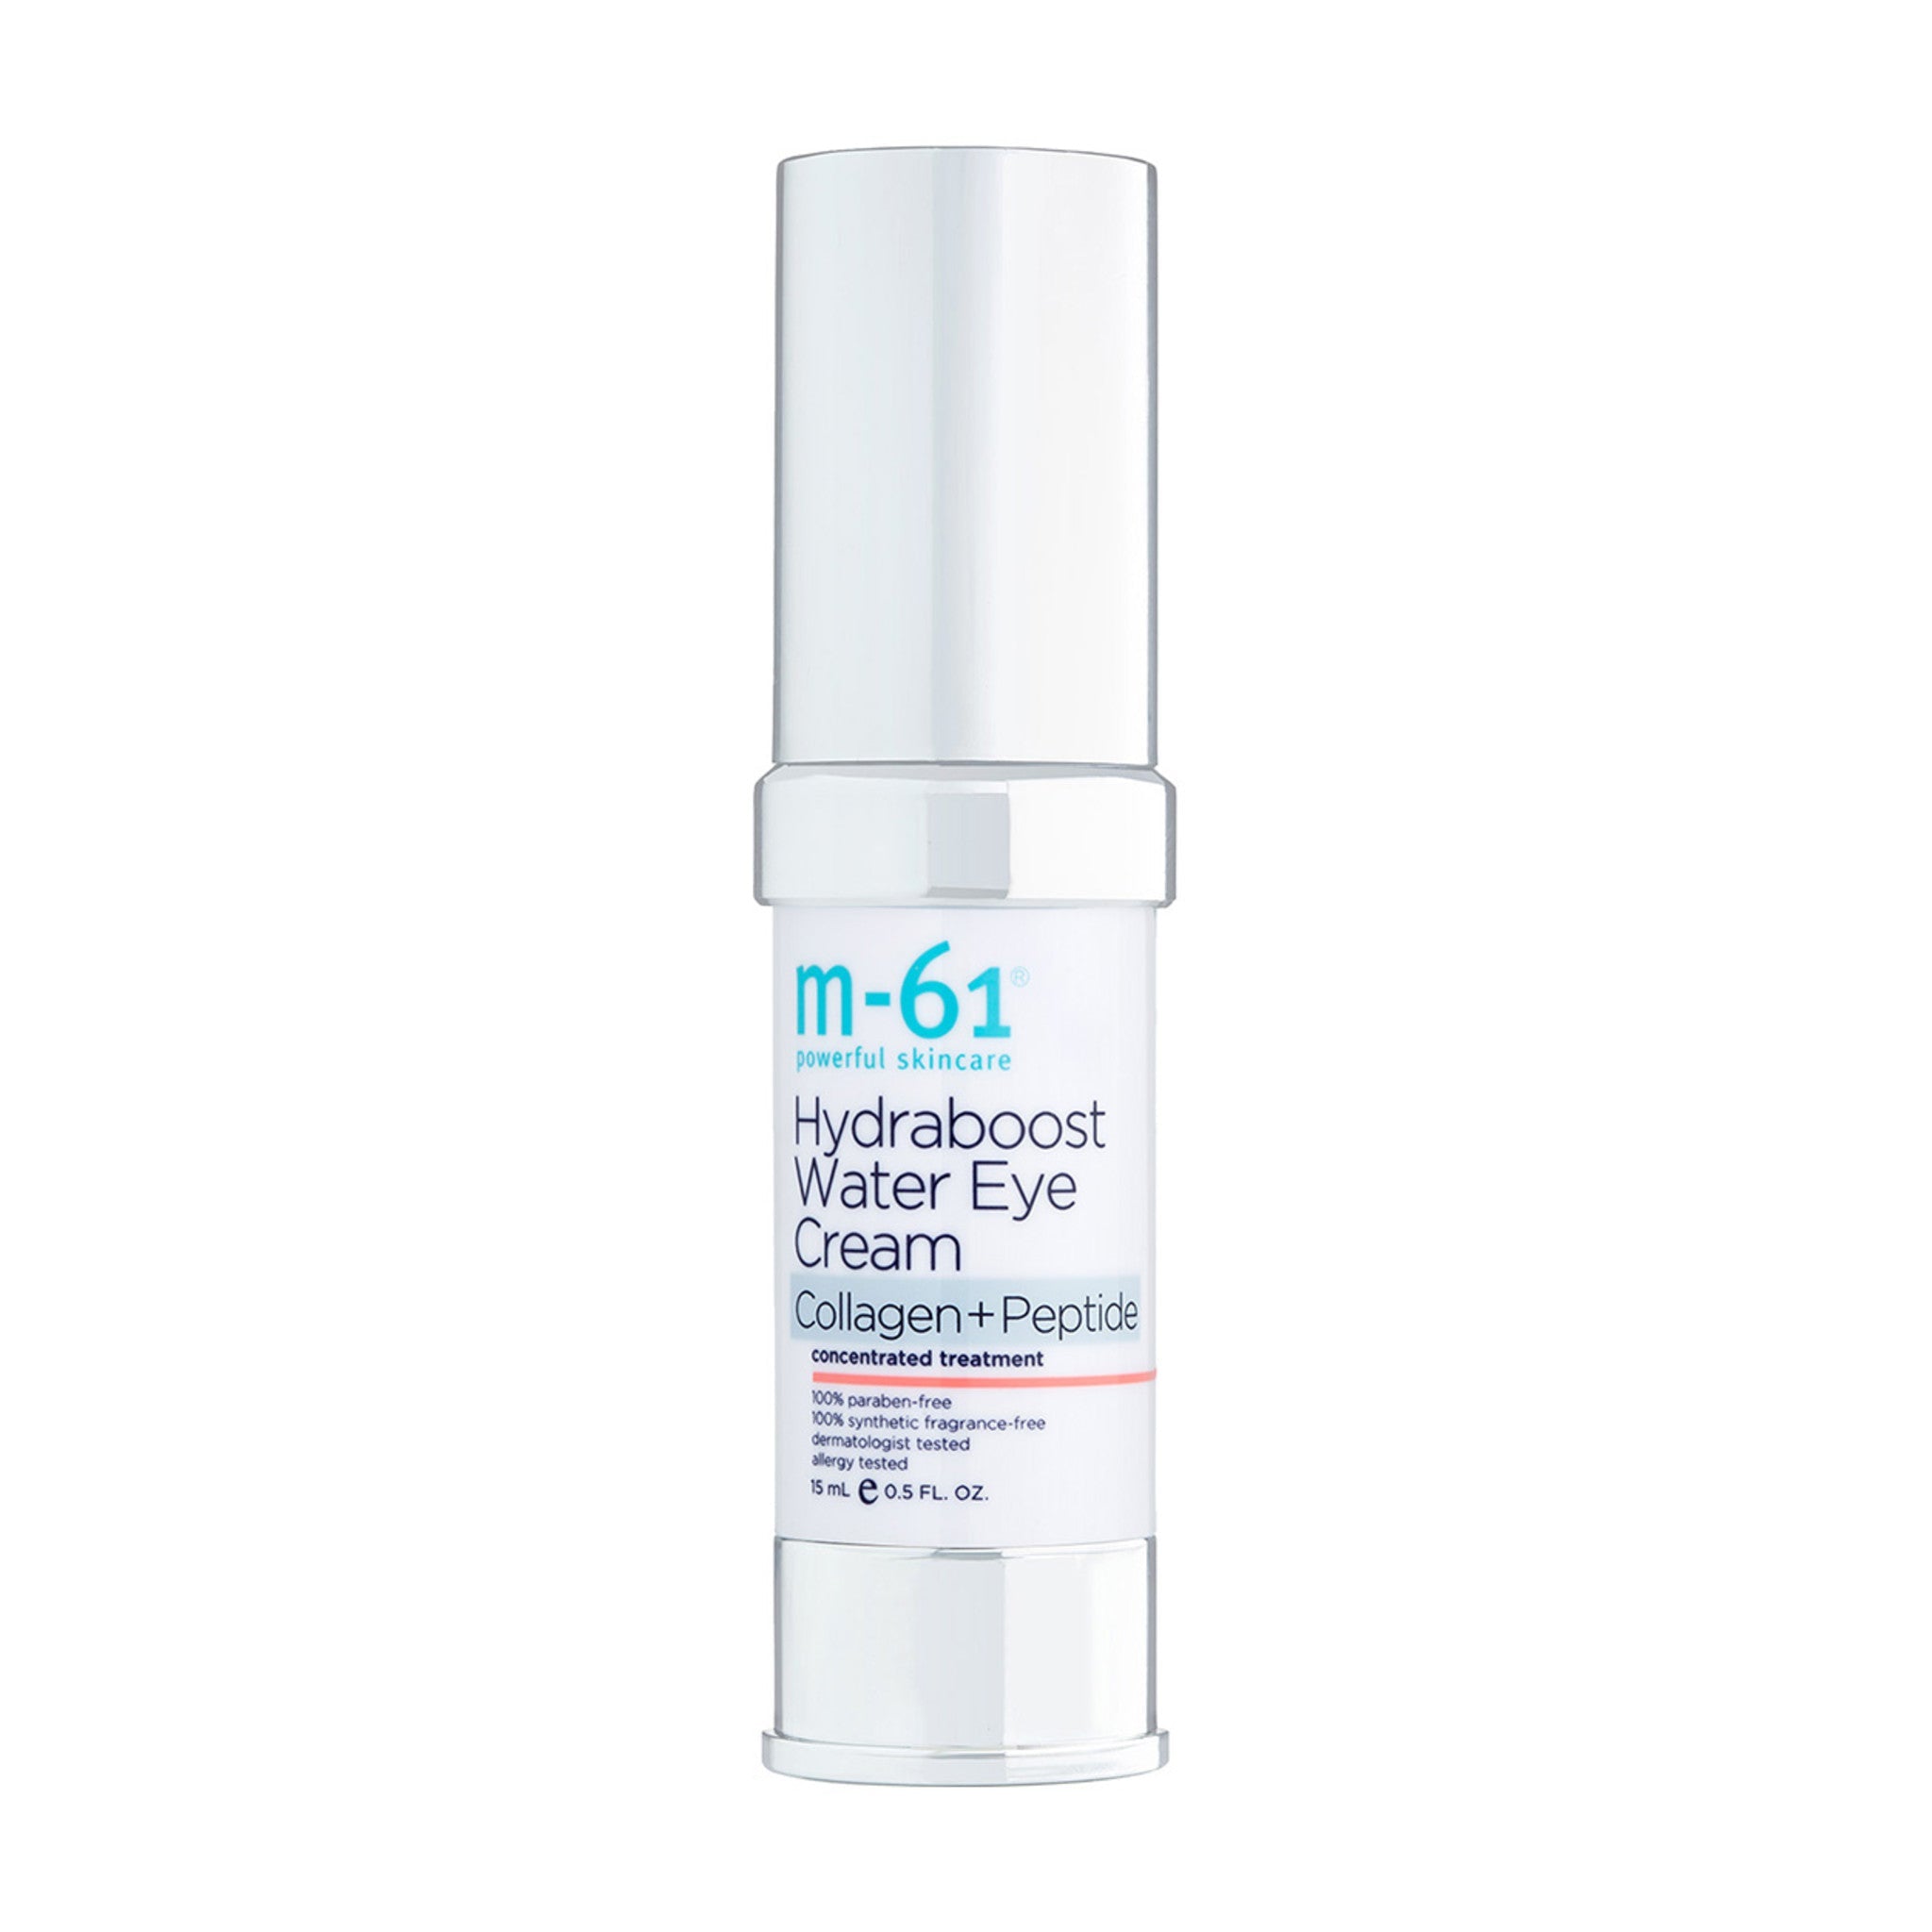 M-61 Hydraboost Collagen+Peptide Water Eye Cream main image.